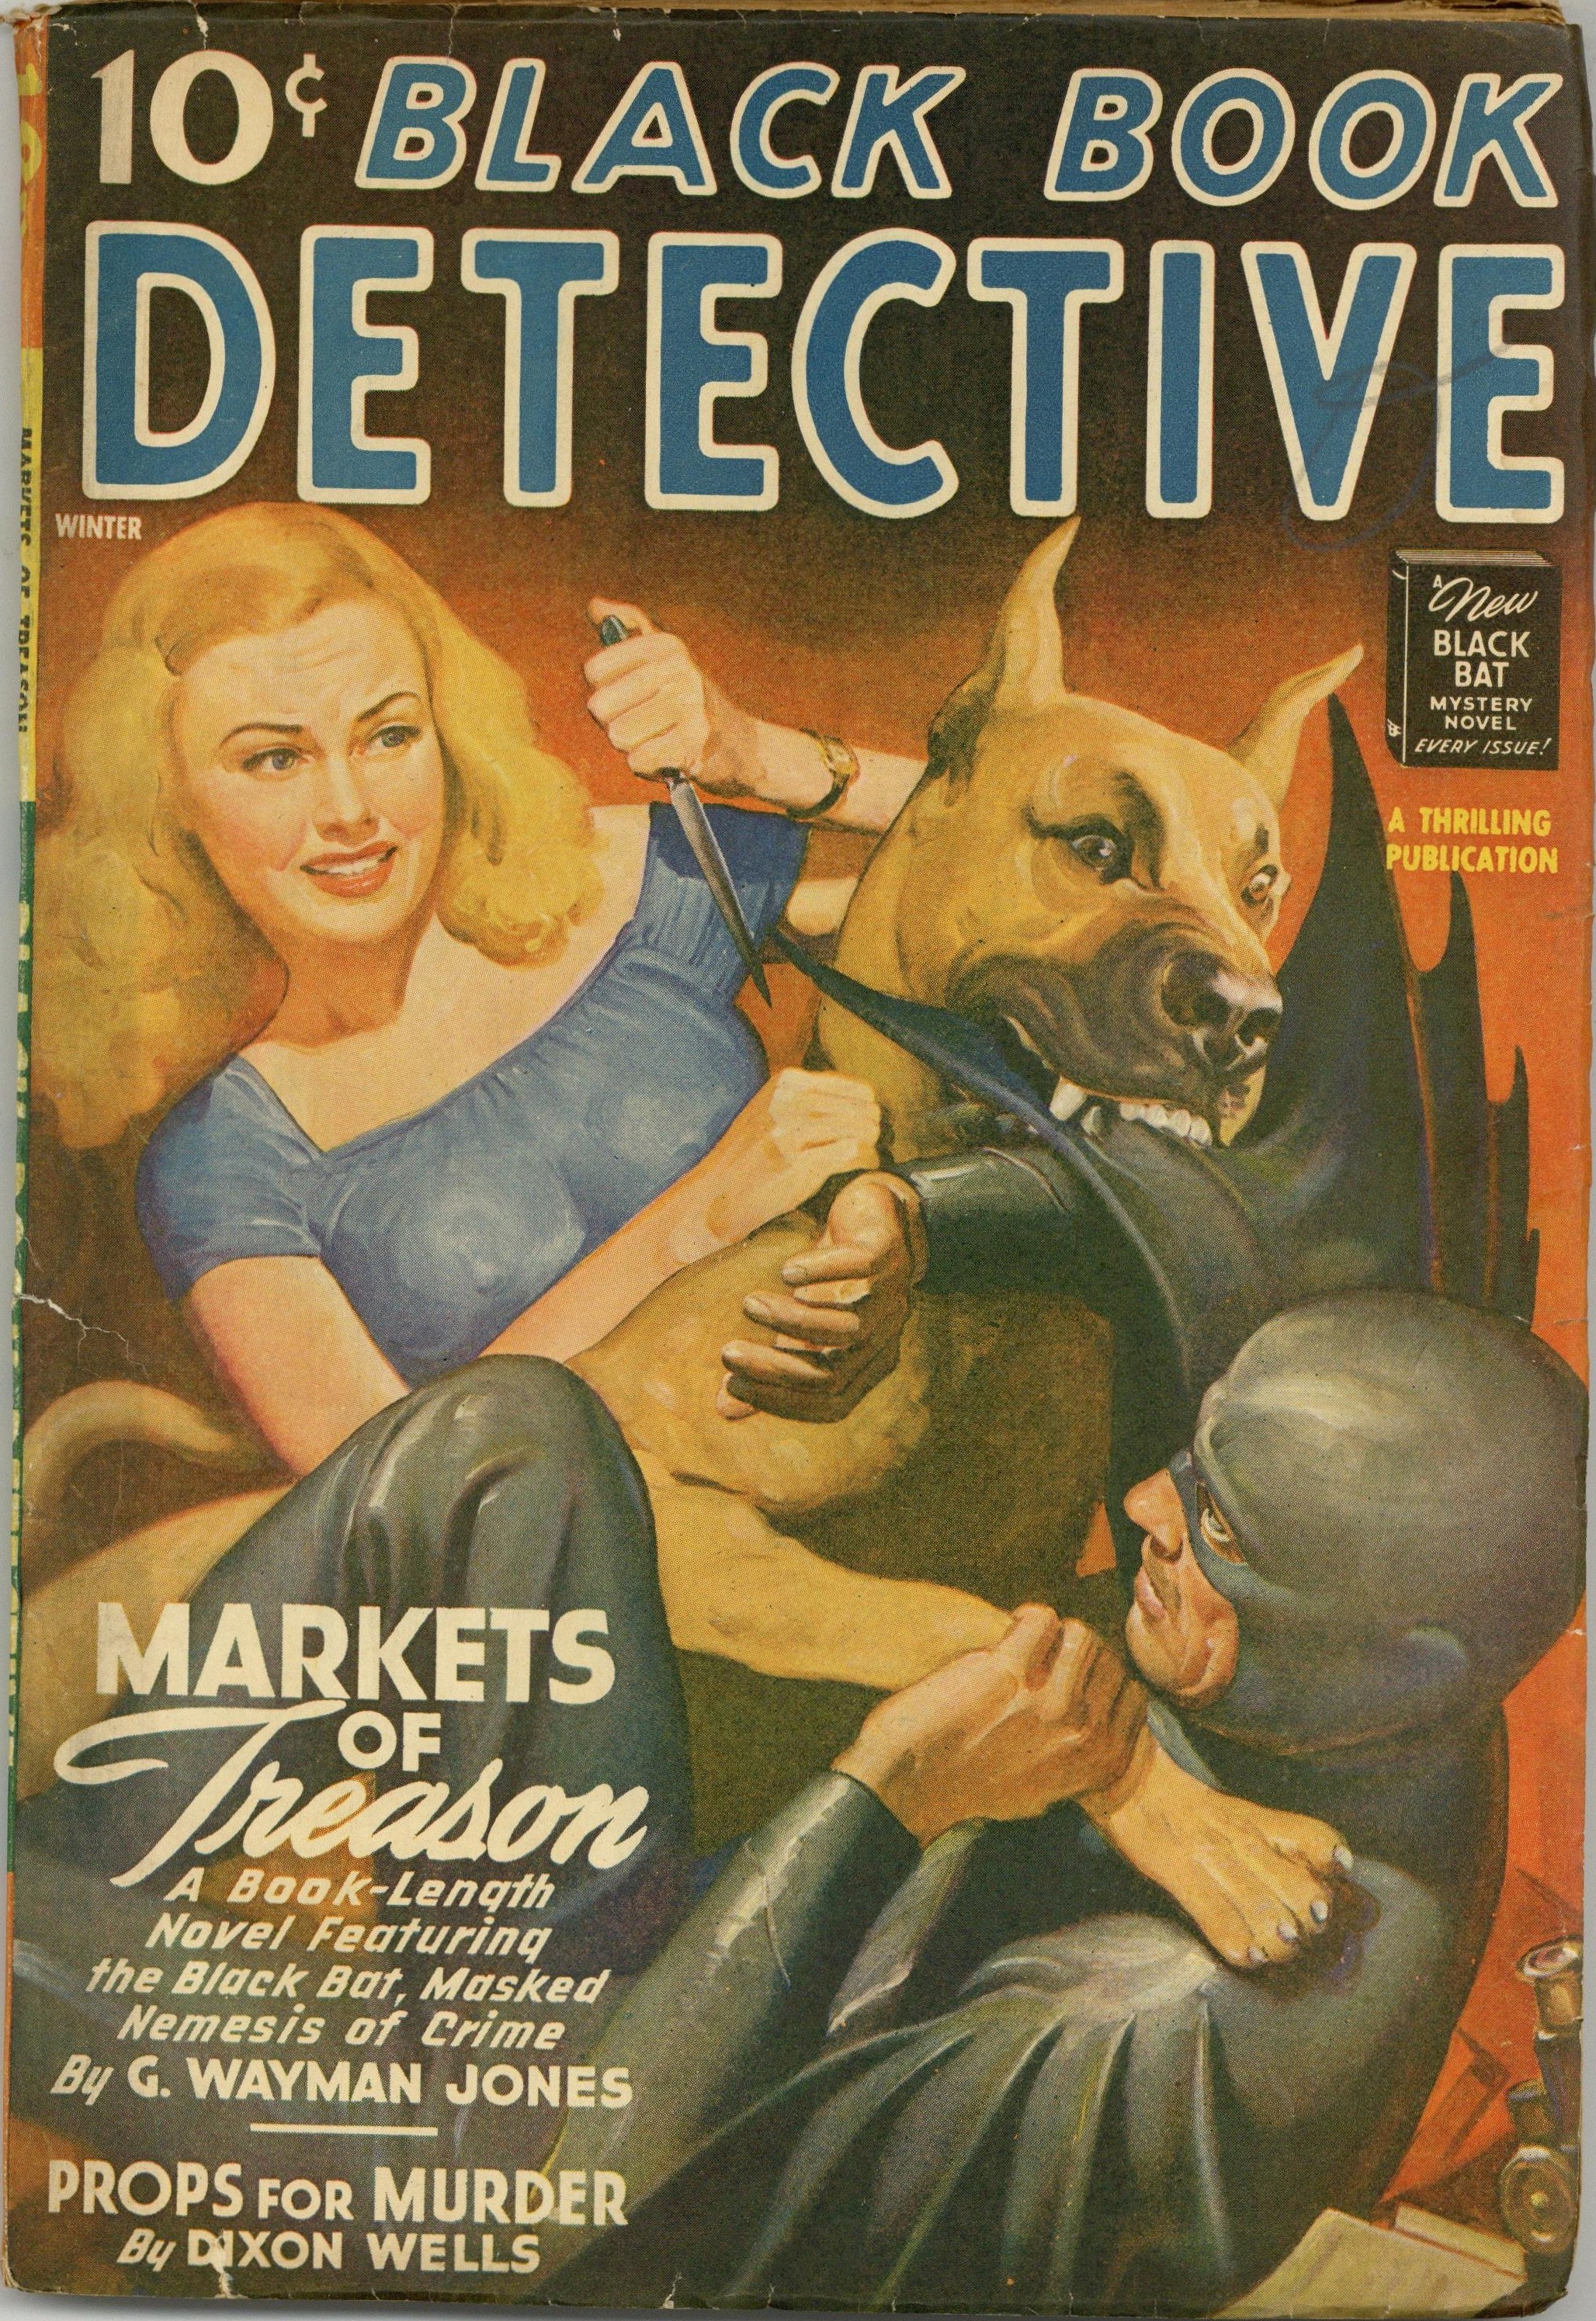 Black Book Detective December 1943